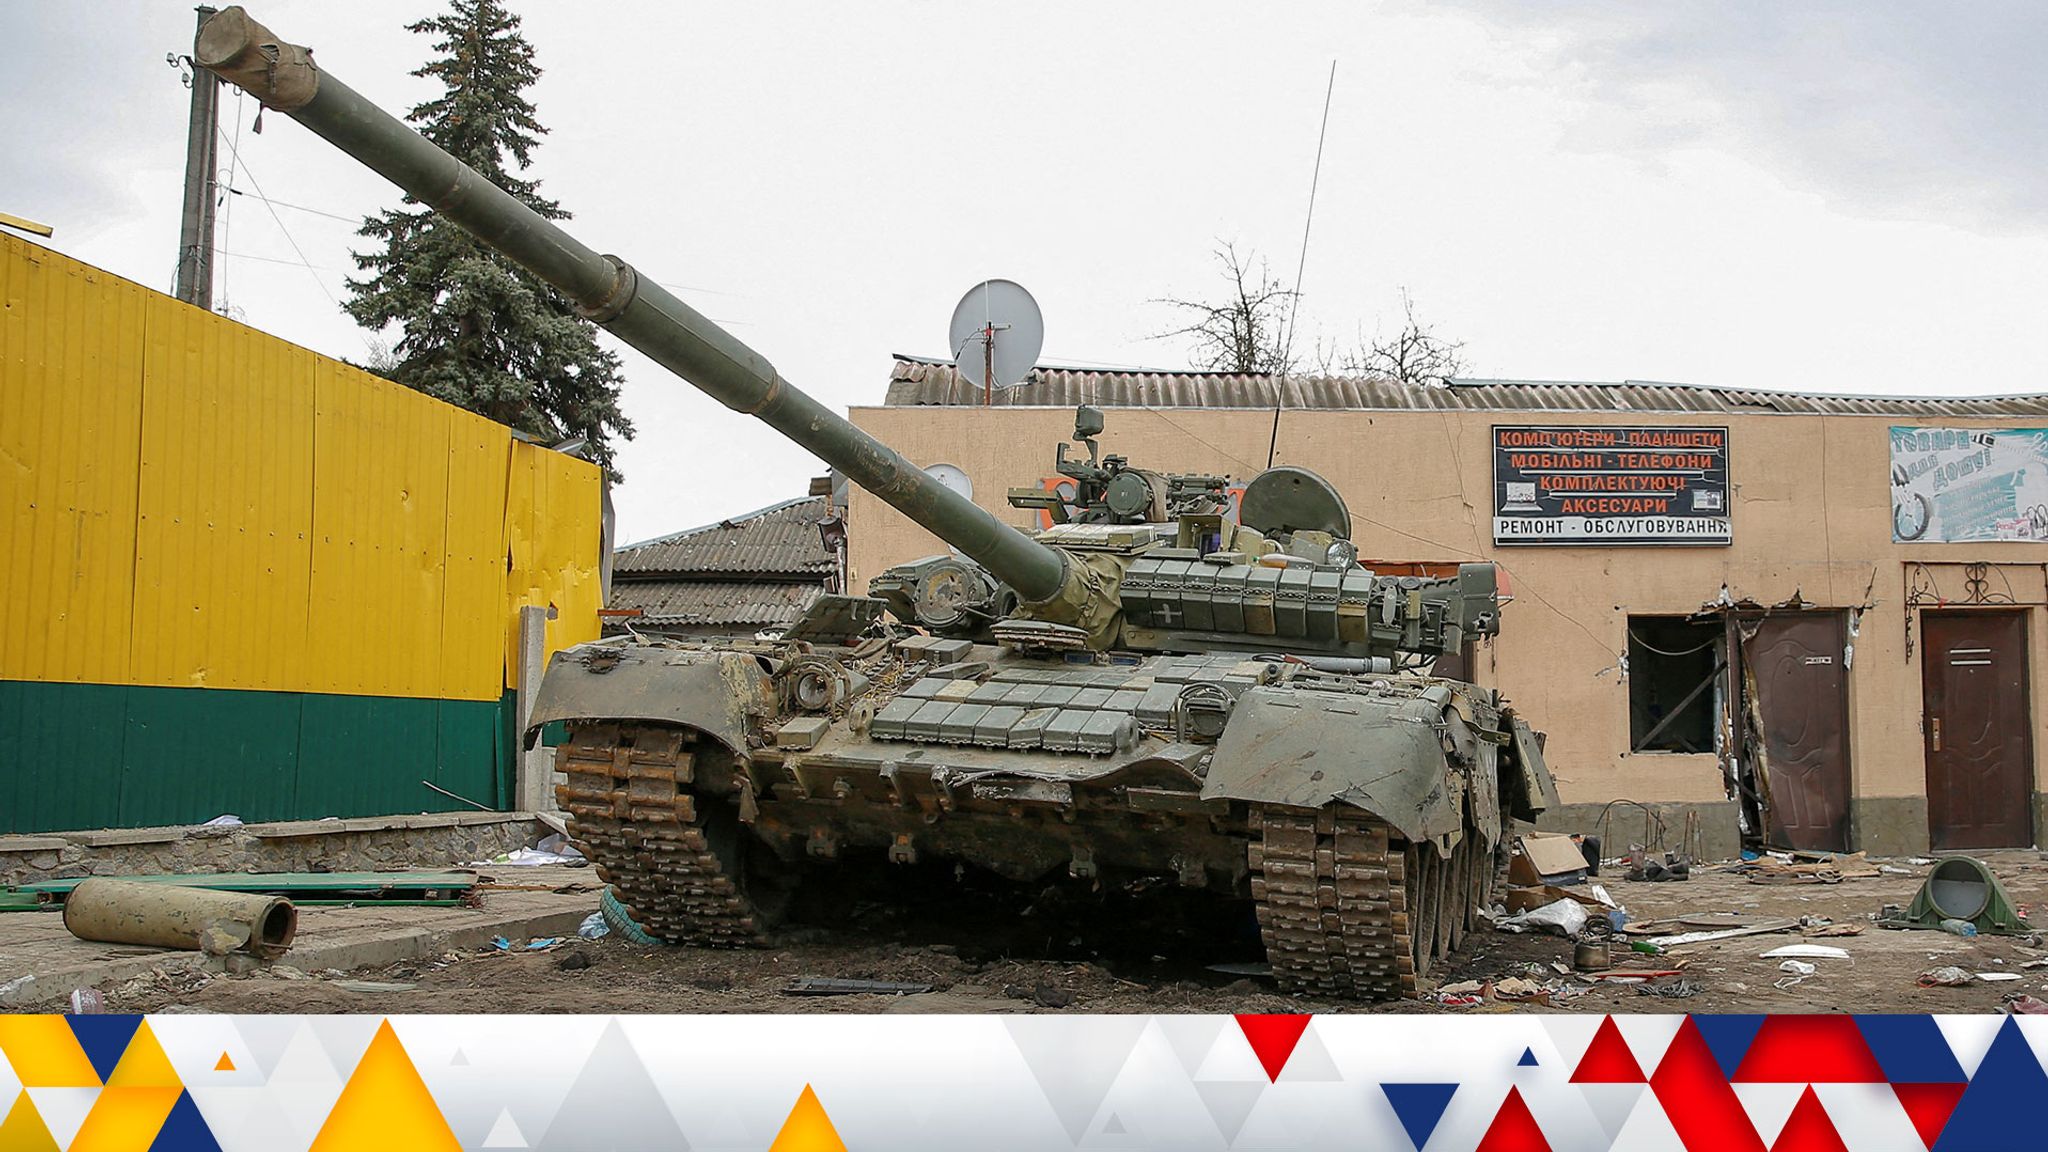 Russian army has lost half its tanks in Ukraine war so far, think tank says